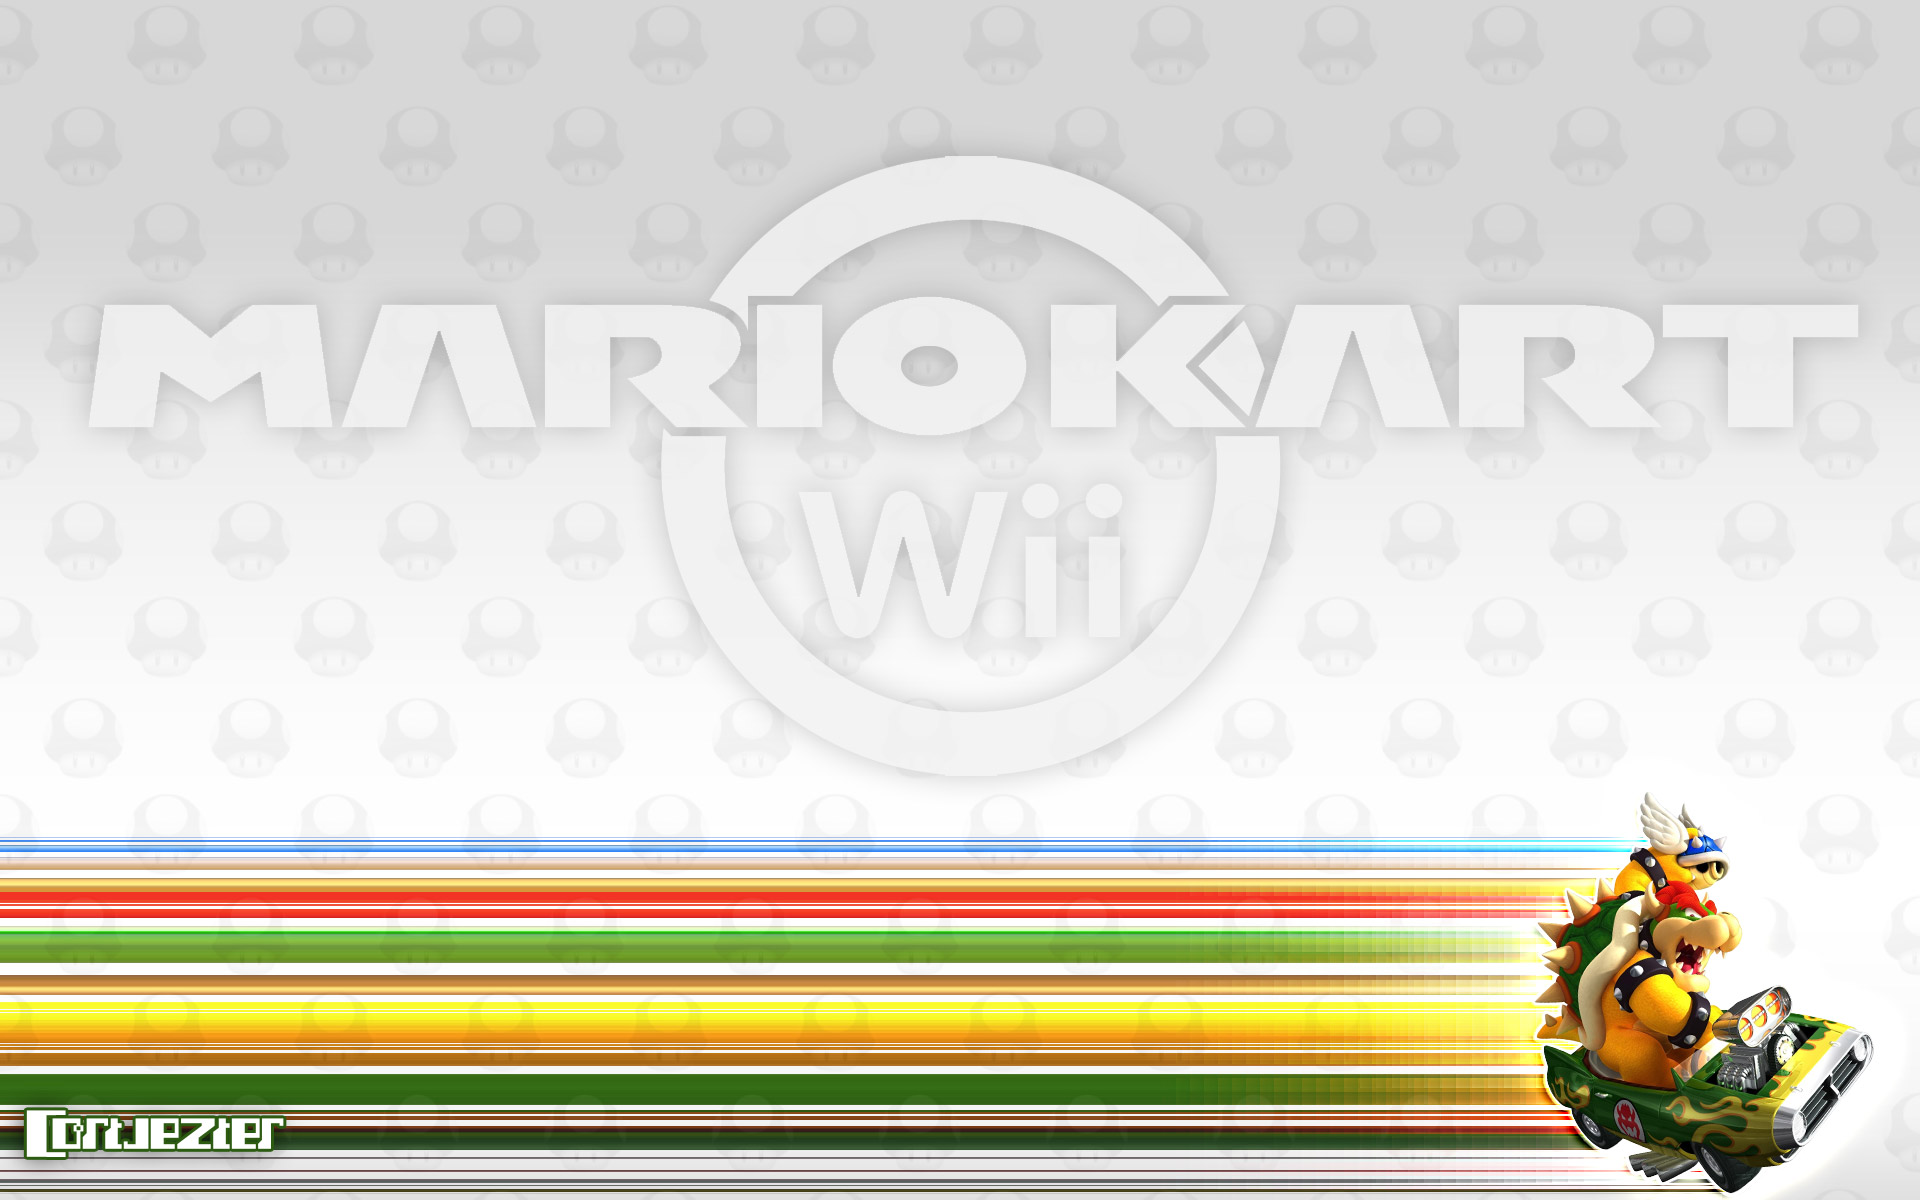 Скачать обои бесплатно Видеоигры, Марио, Боузер, Марио Карт Wii картинка на рабочий стол ПК